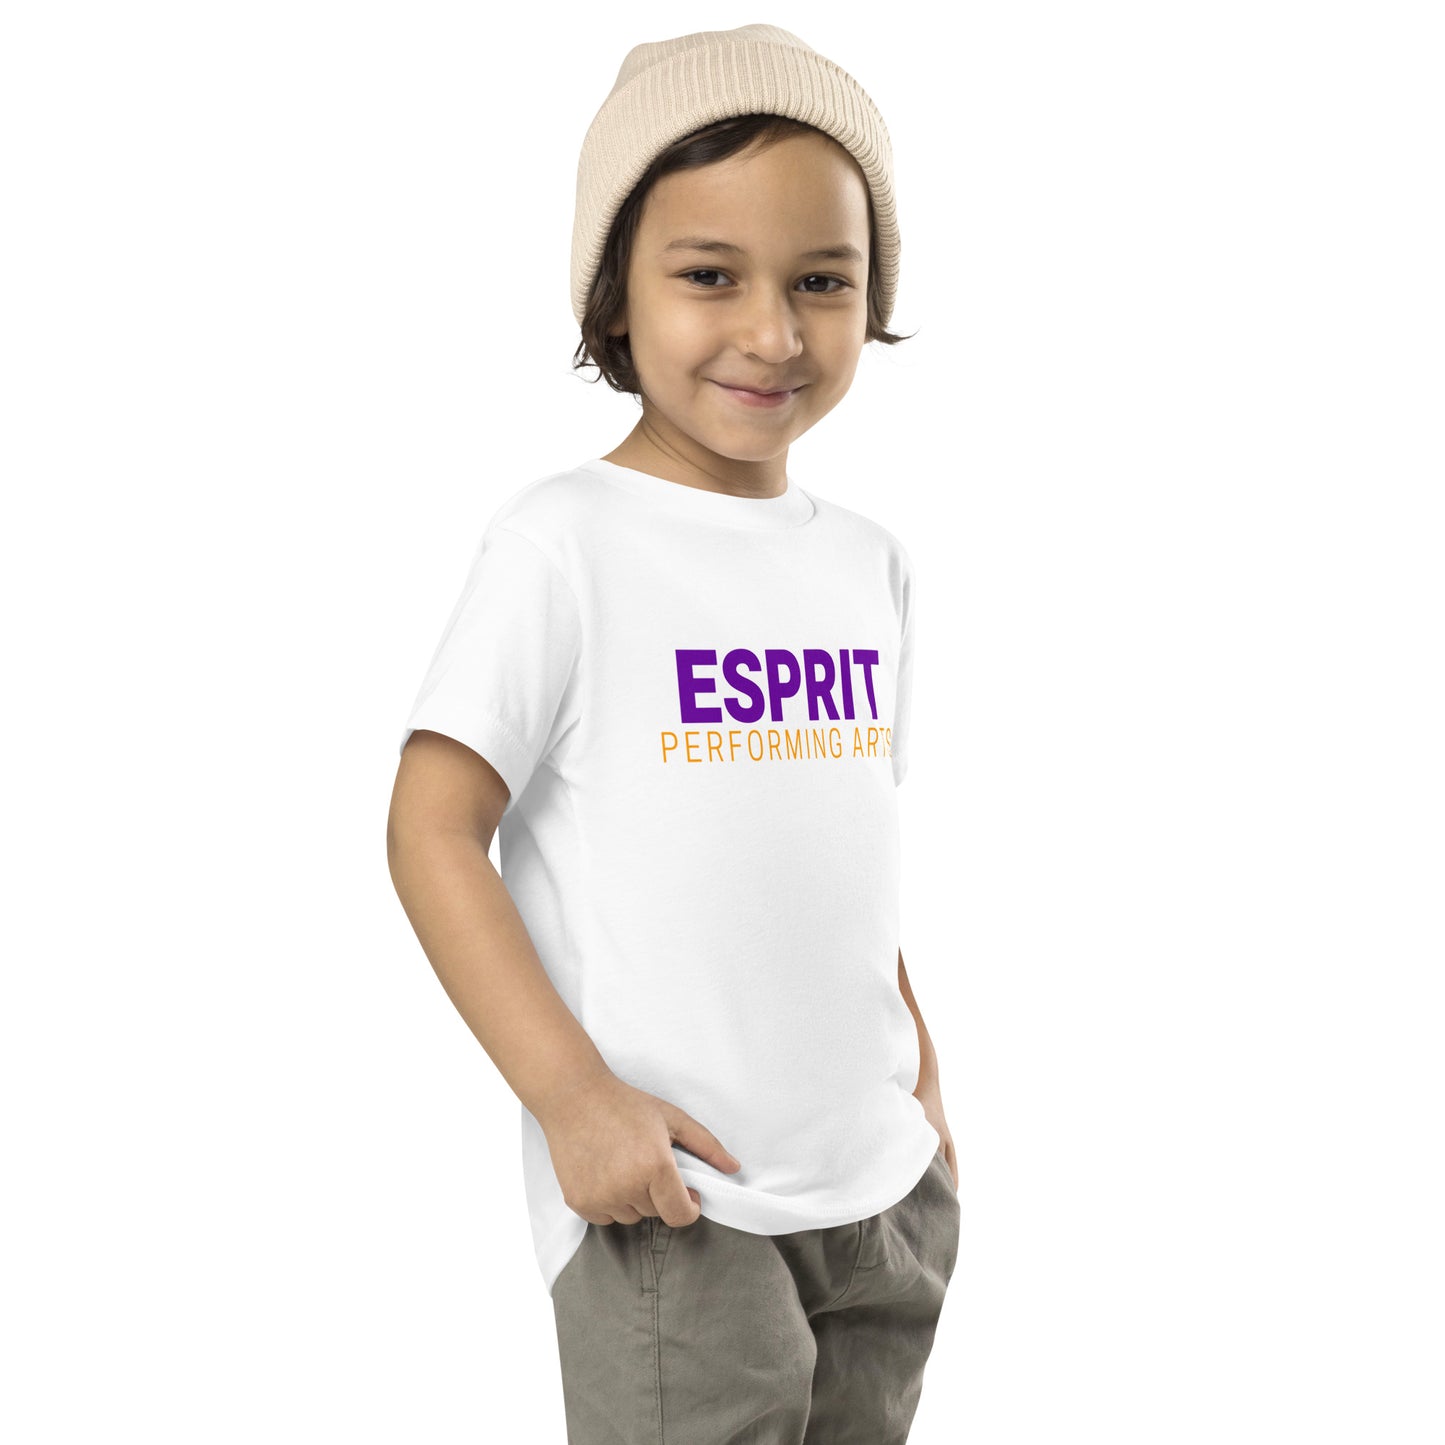 Esprit Performing Arts Logo T-Shirt - Toddler